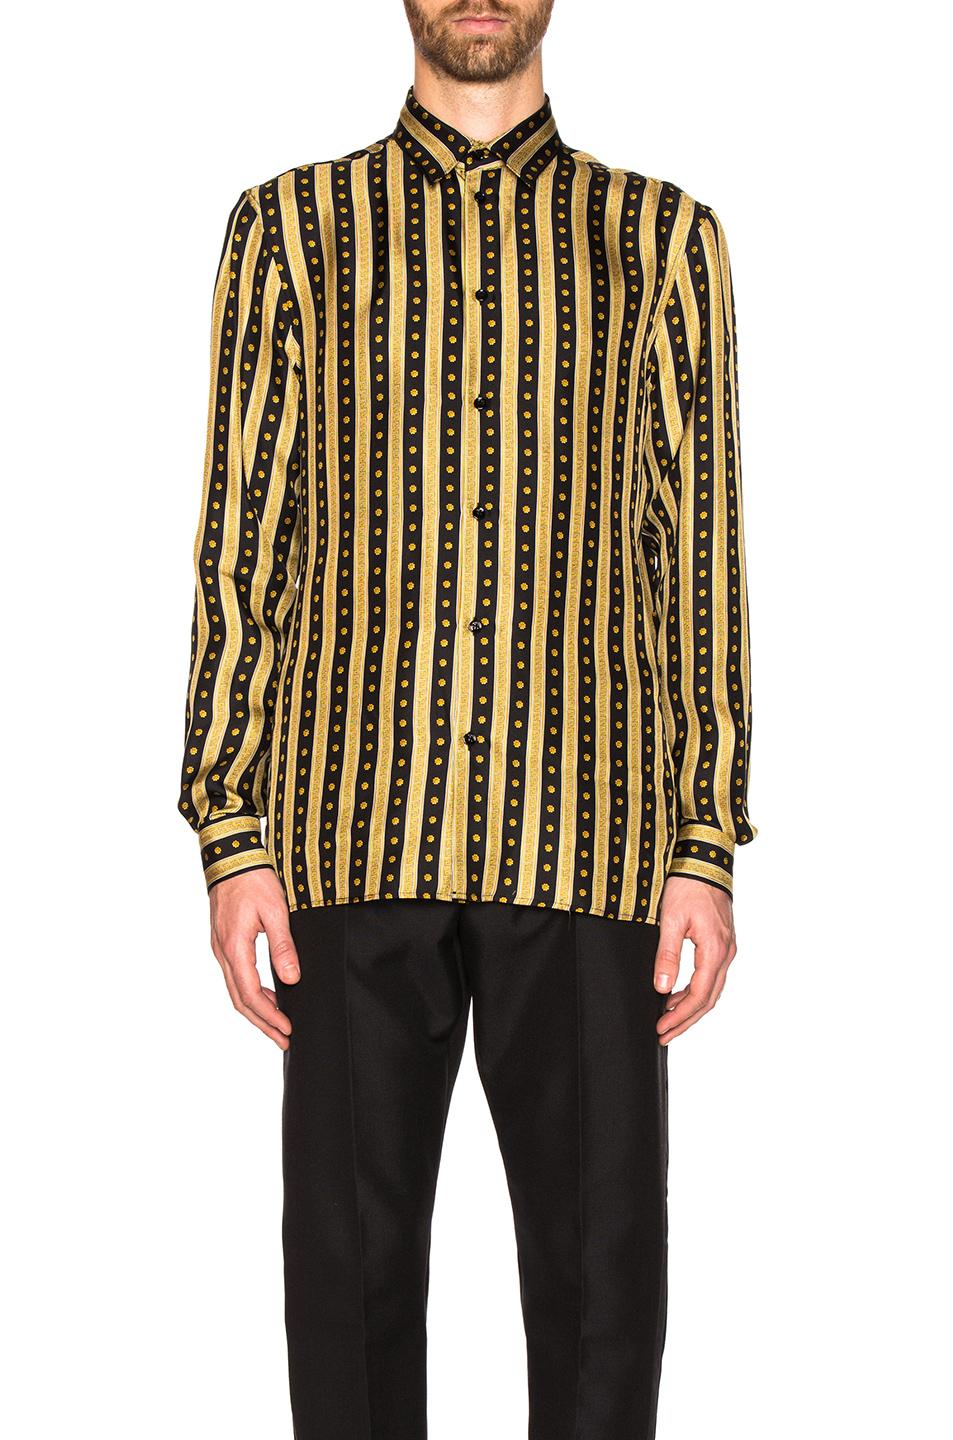 Versace Silk Logo Stripe Shirt in Black & Gold (Black) for Men - Lyst